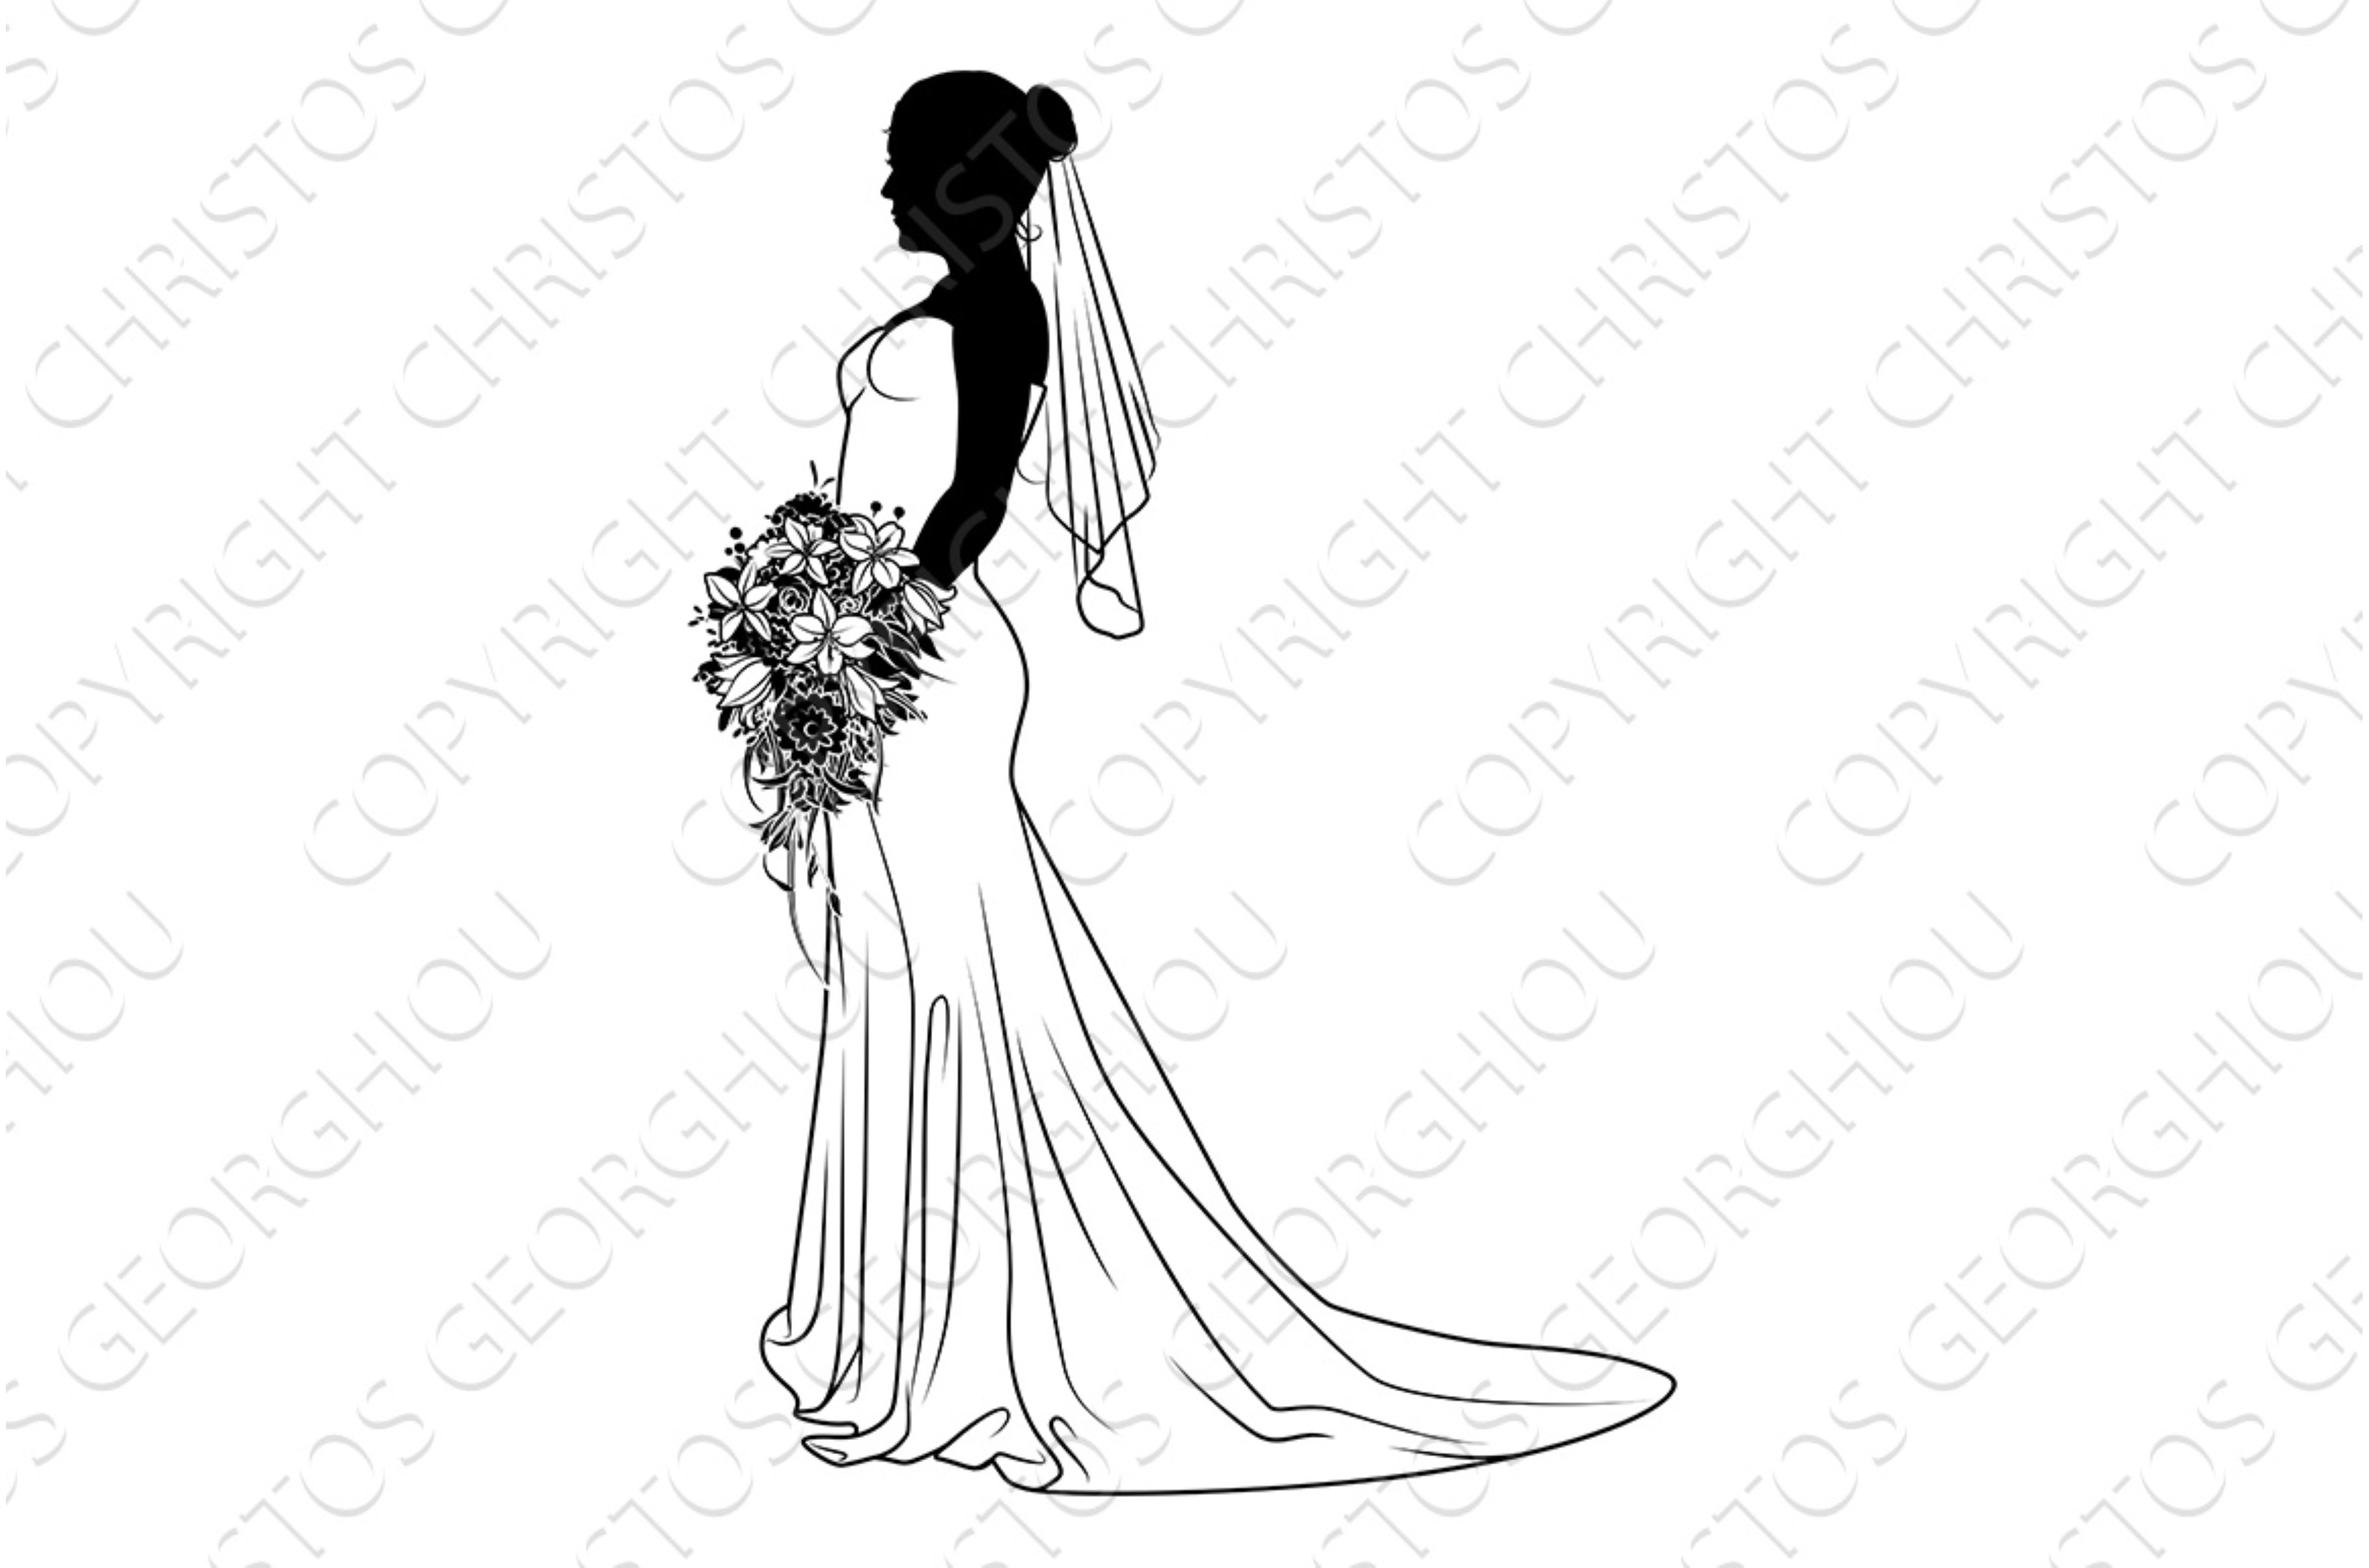 Bride Bridal Wedding Dress cover image.